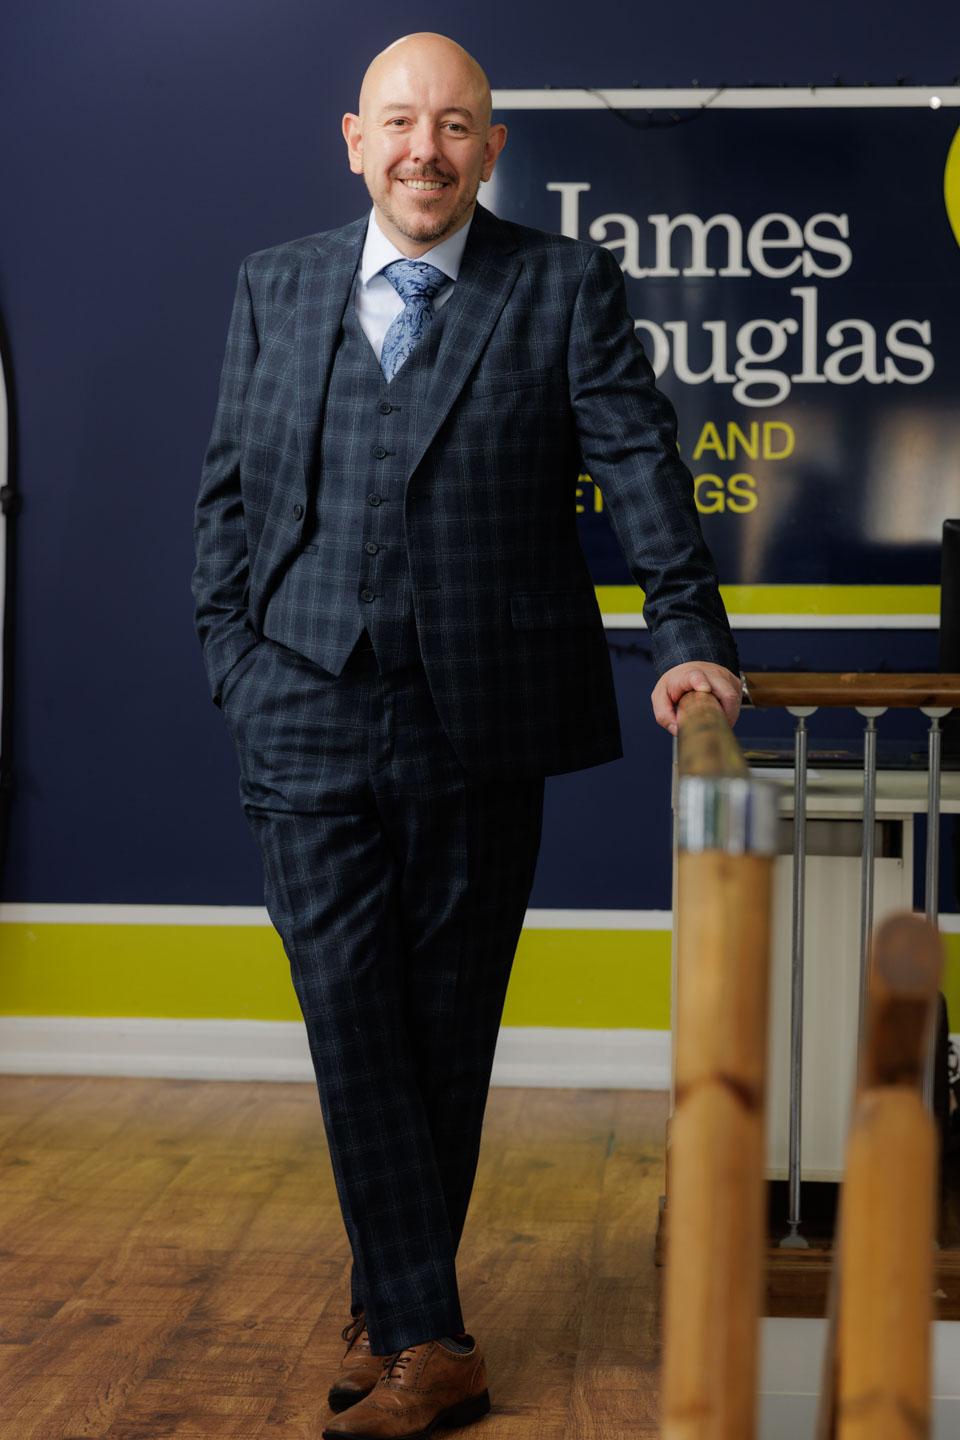 Douglas Haig, Managing Director of James Douglas James Douglas Pontypridd 01443 485000